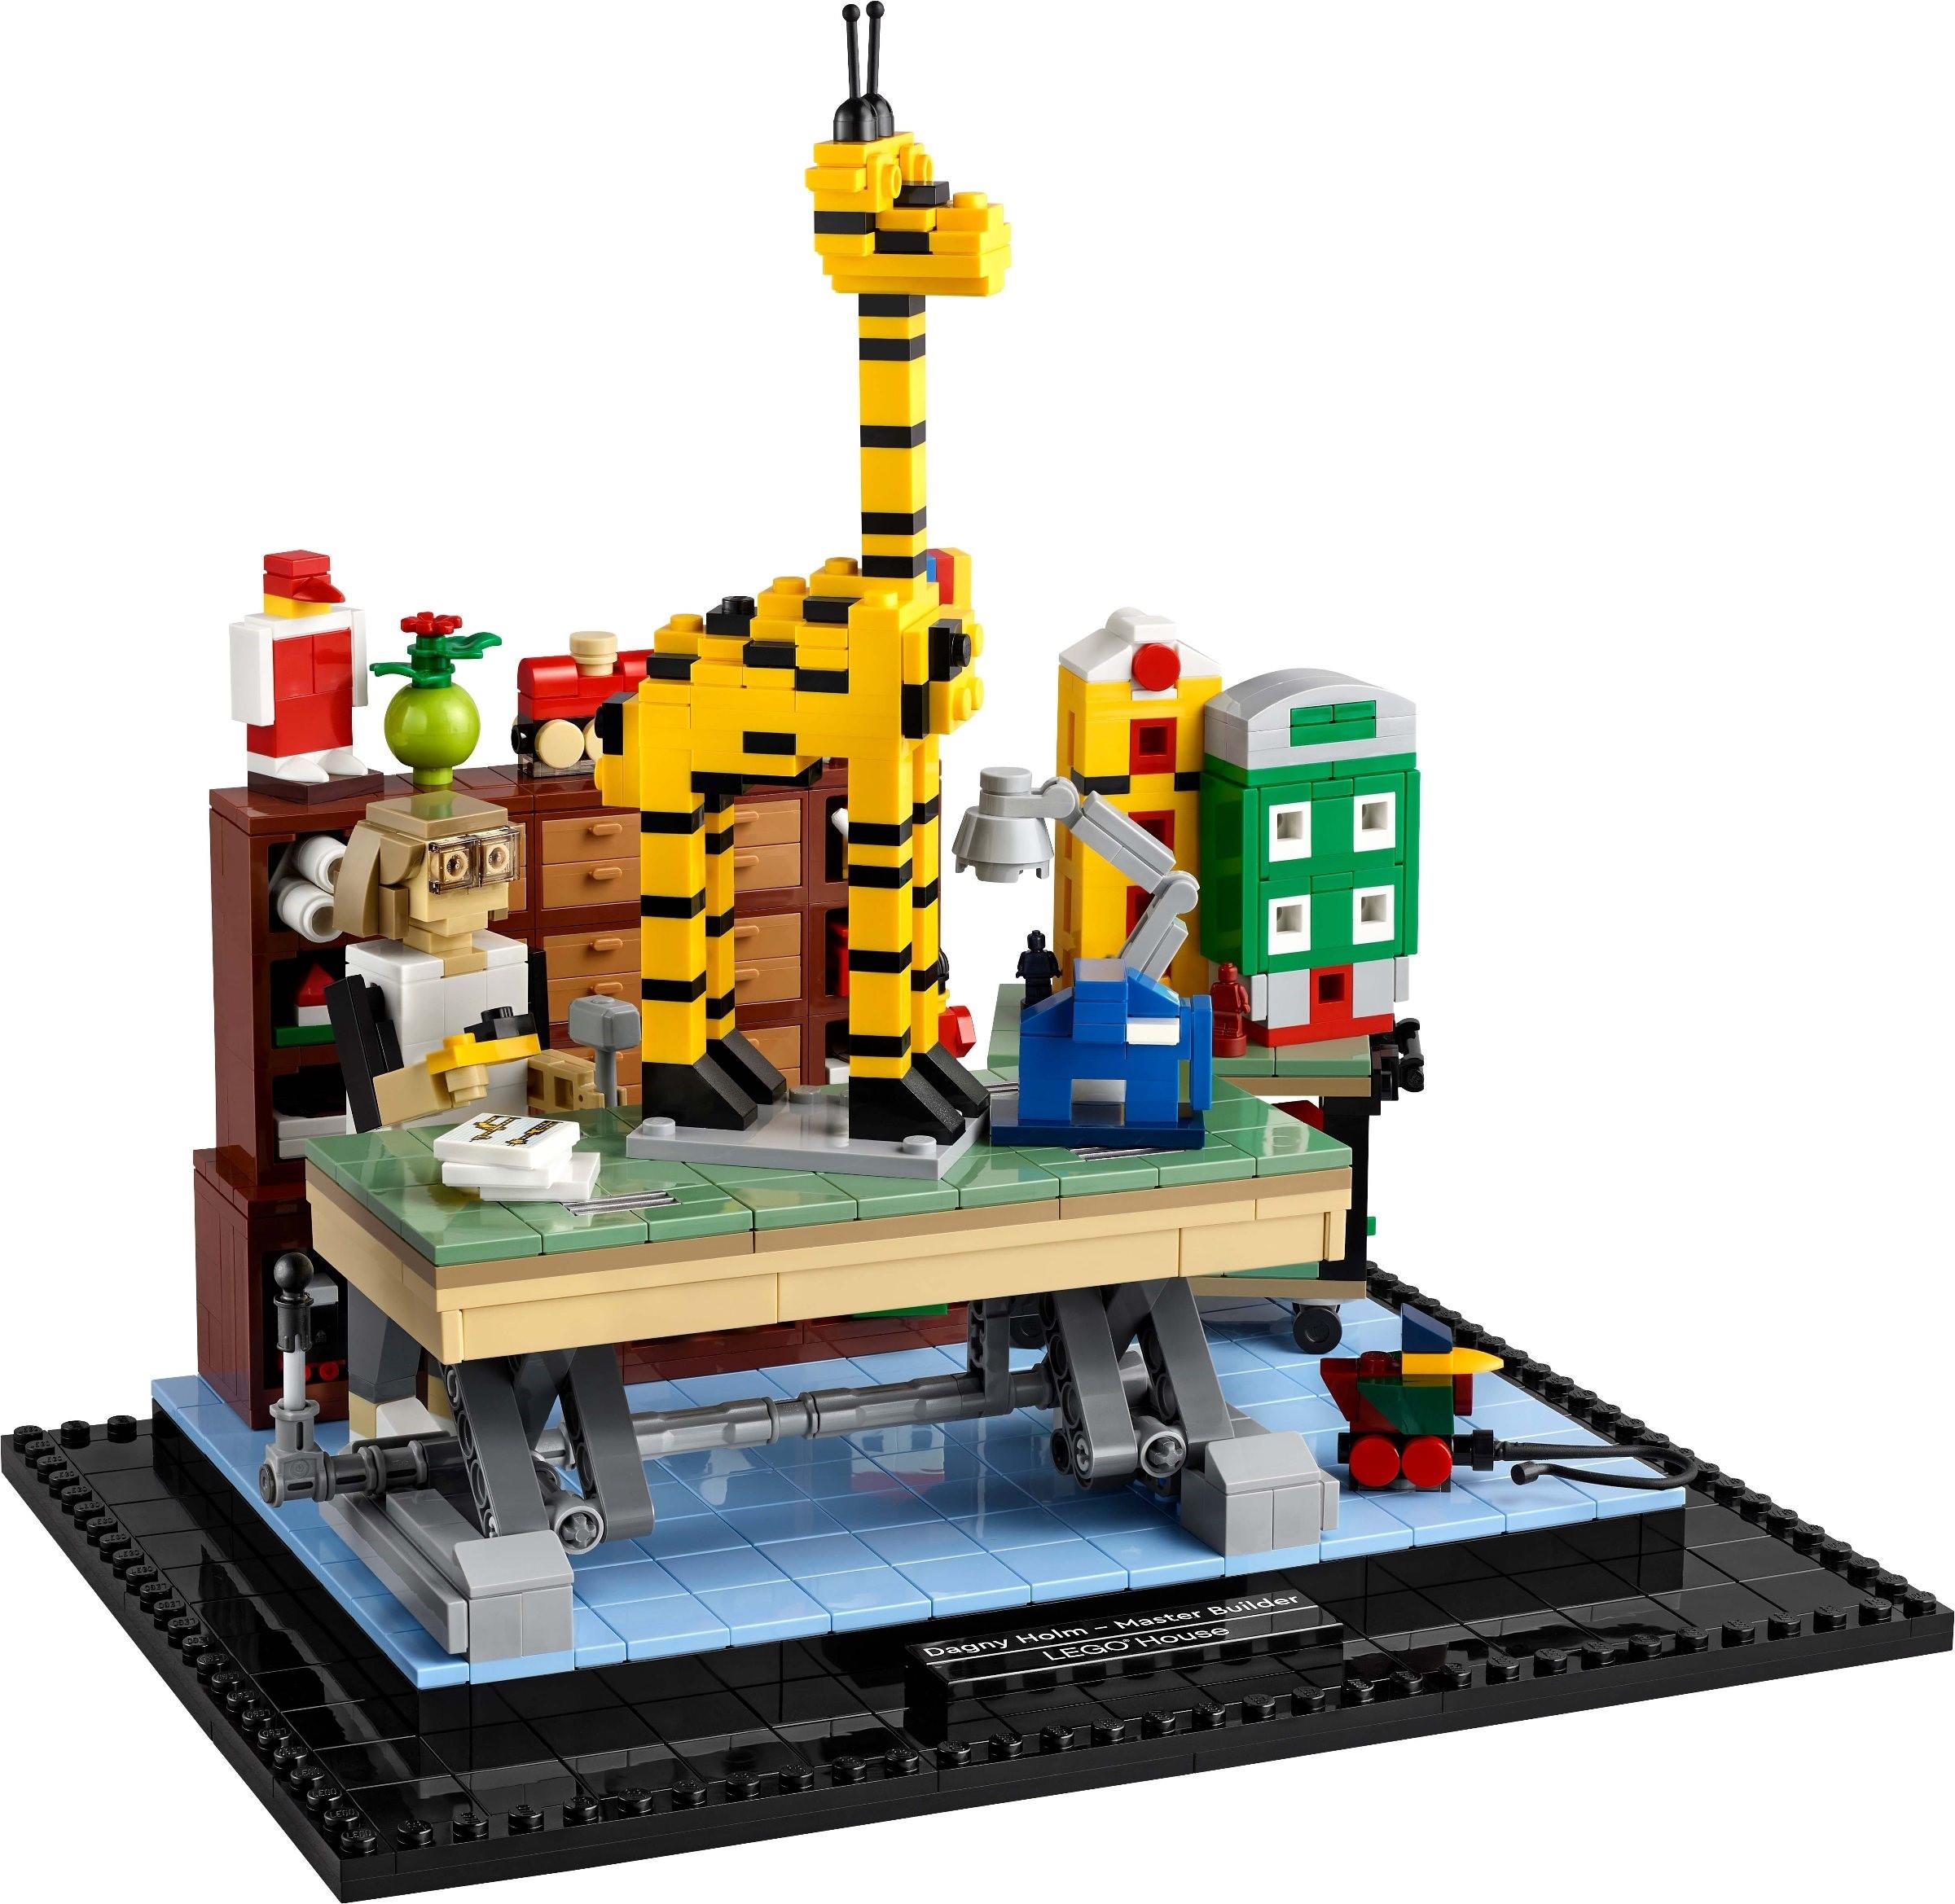 LEGO House Dagny Holm Master Builder | BrickEconomy